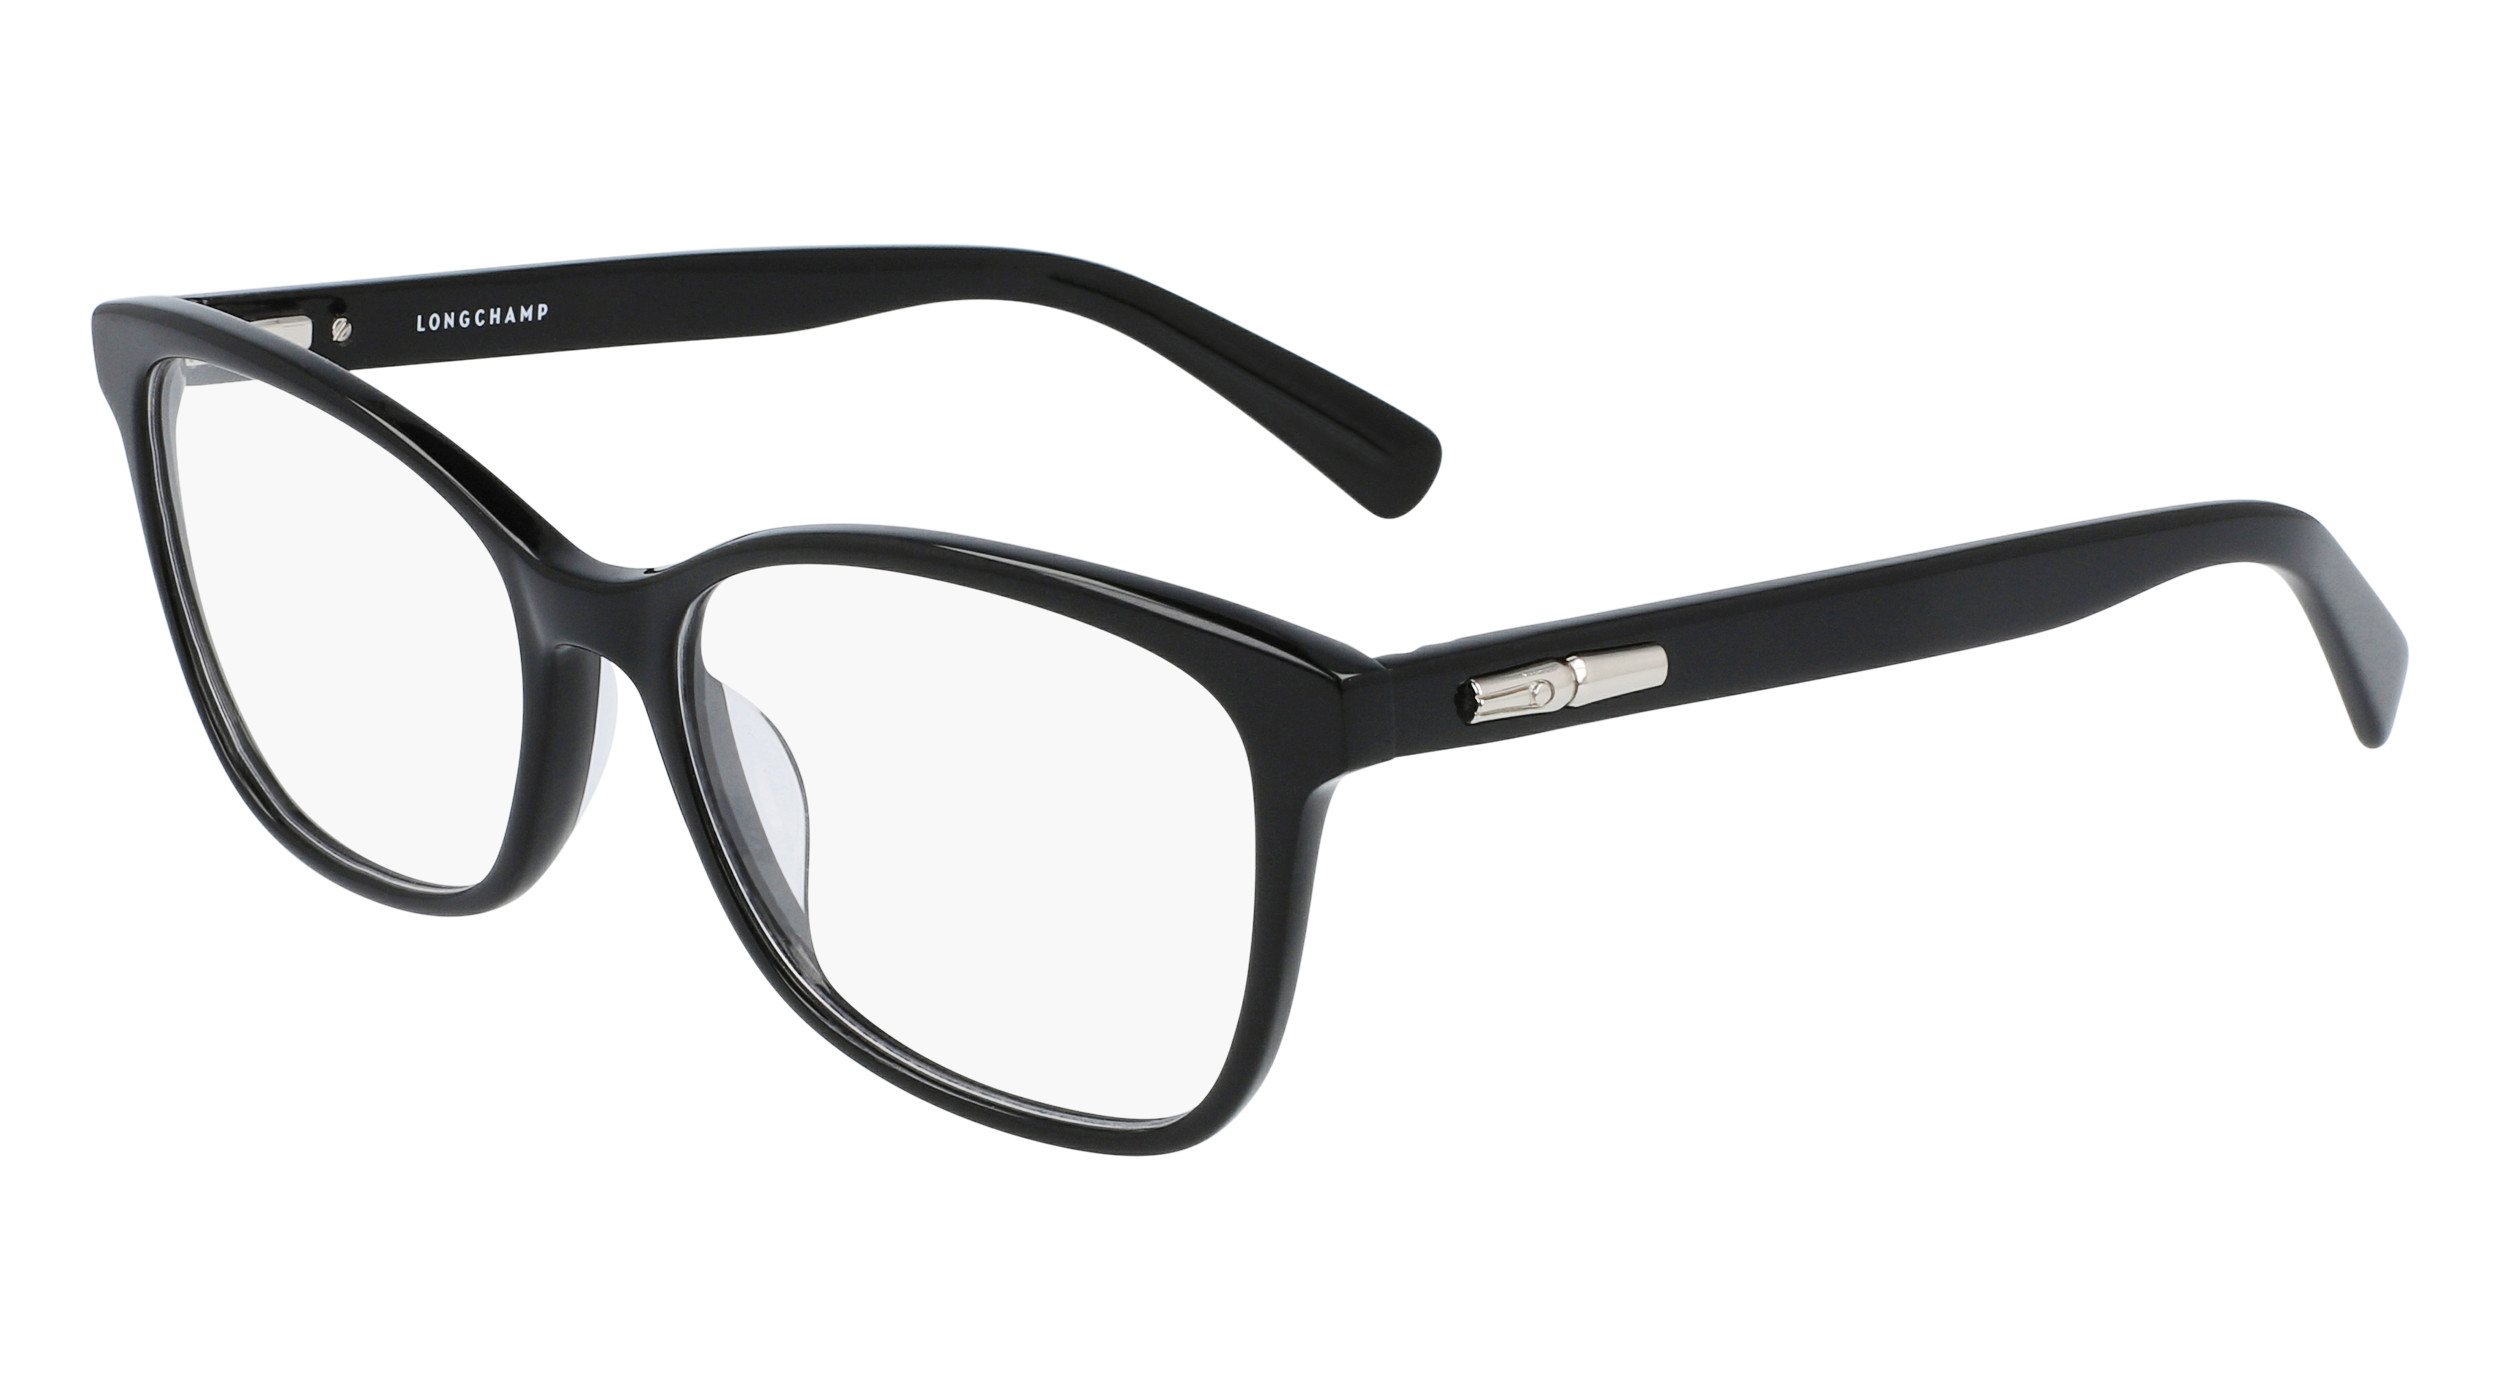 Longchamp Matte Black Eyeglasses By G&M Eyecare